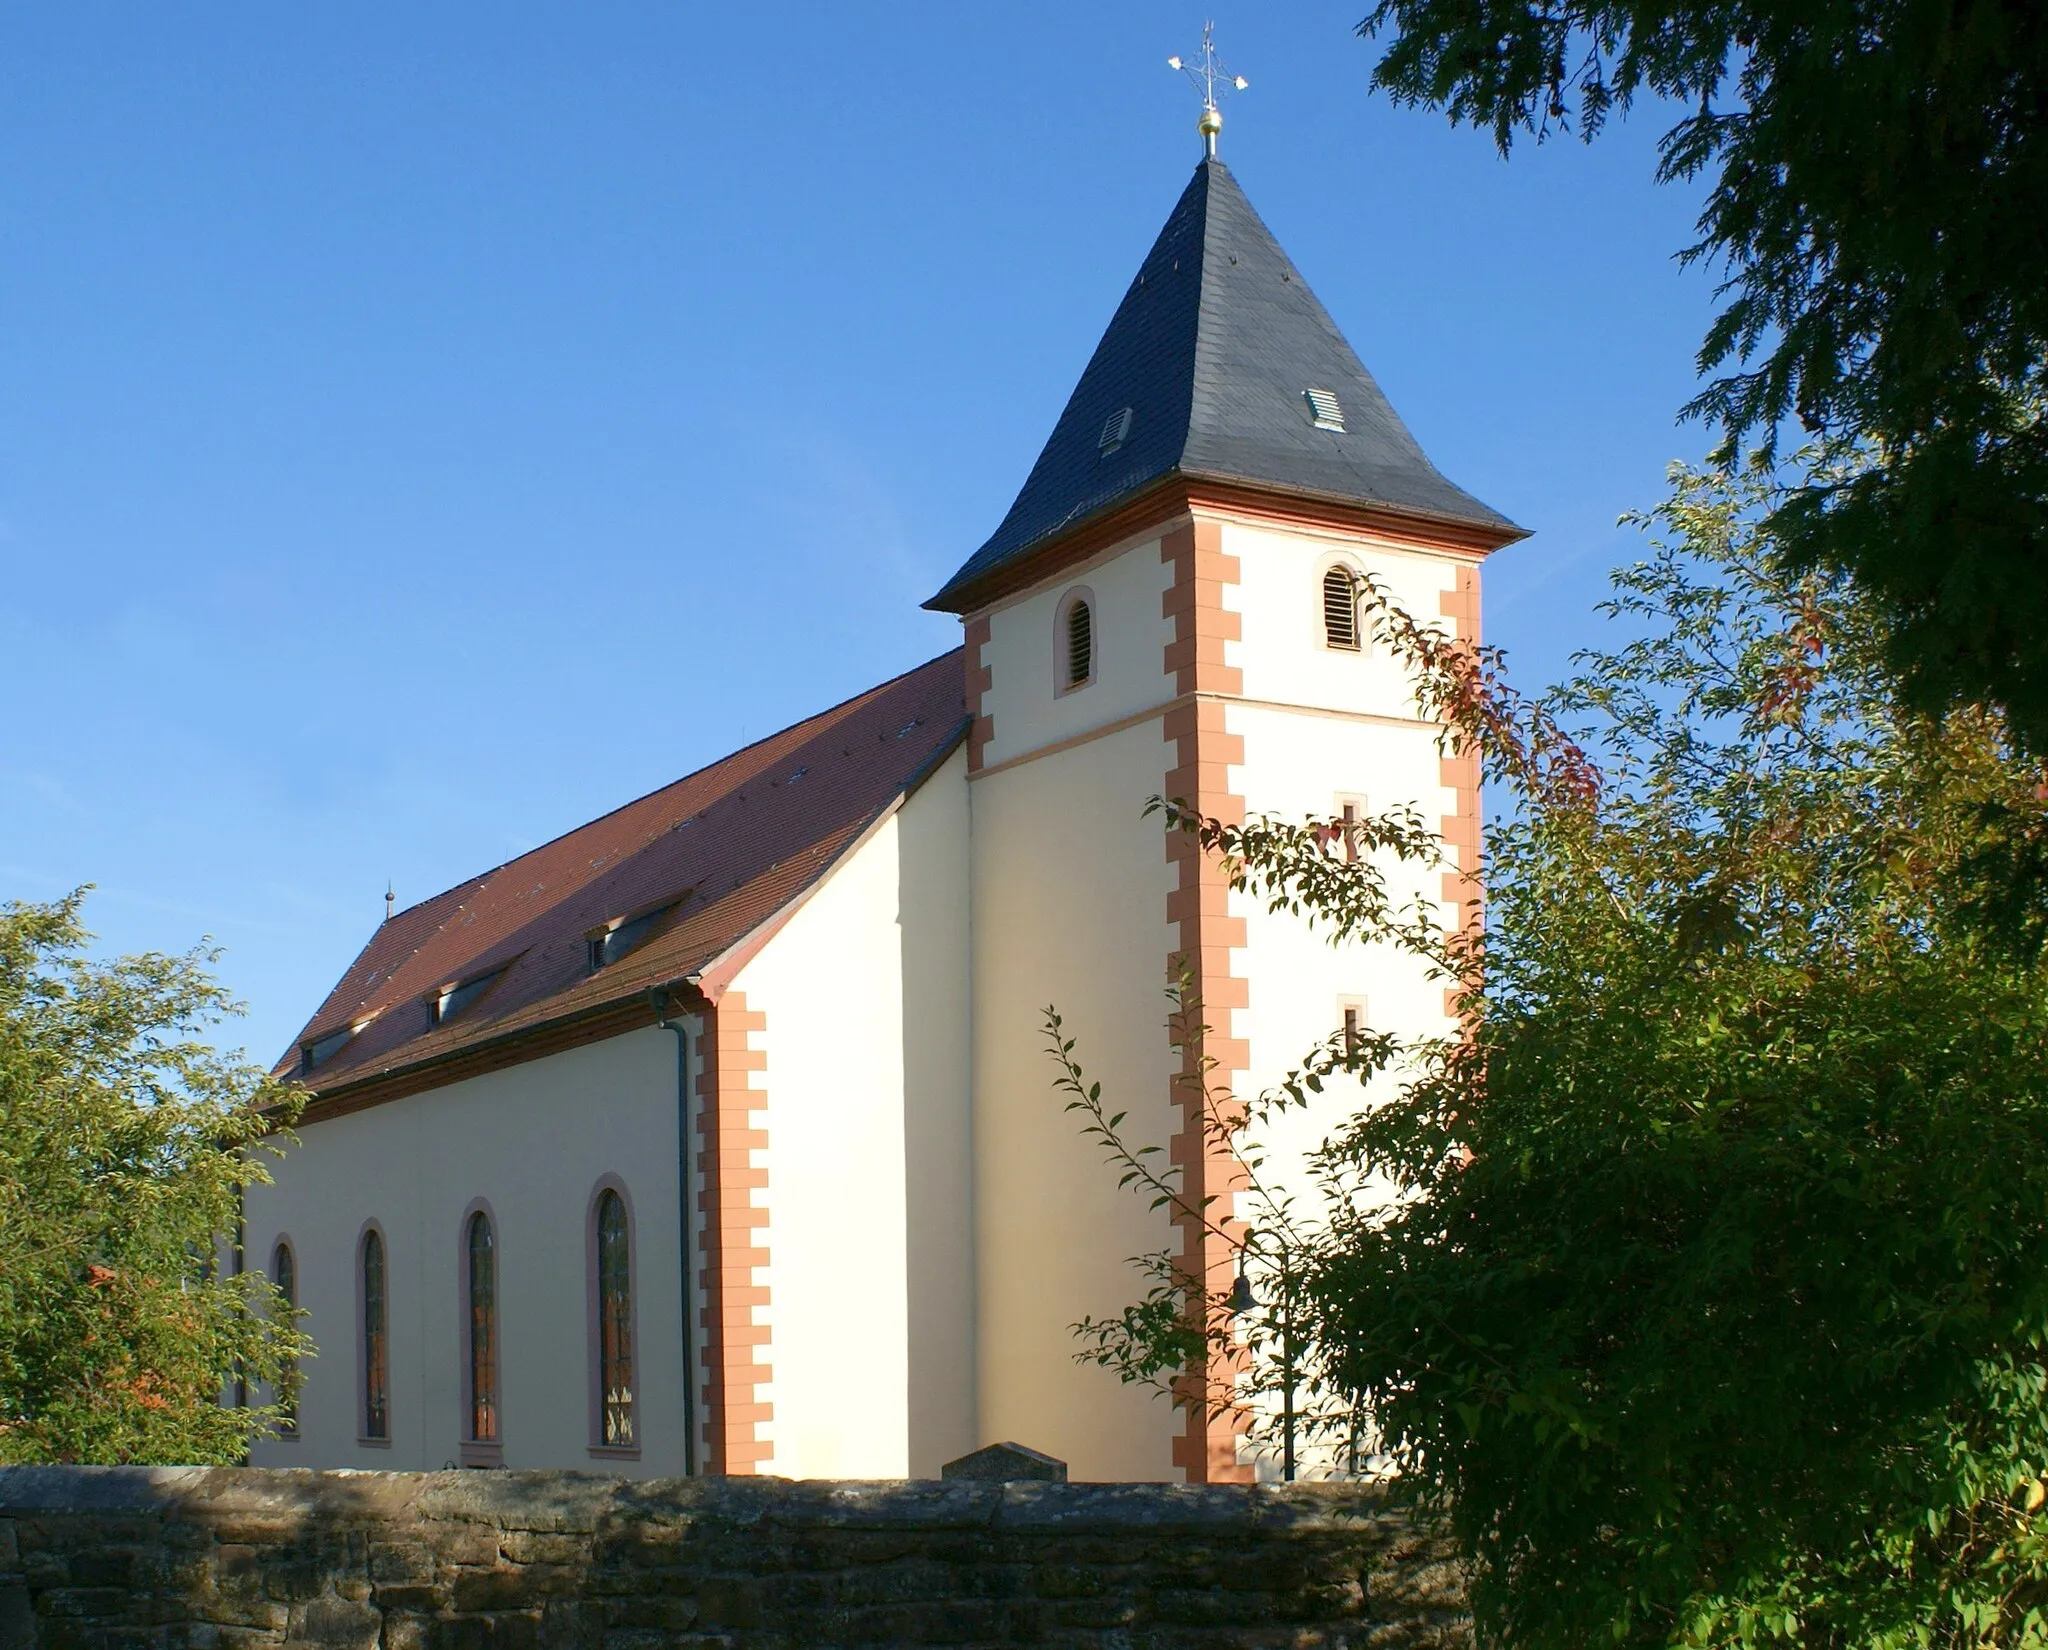 Photo showing: The parish church St. Vitus in Sailauf